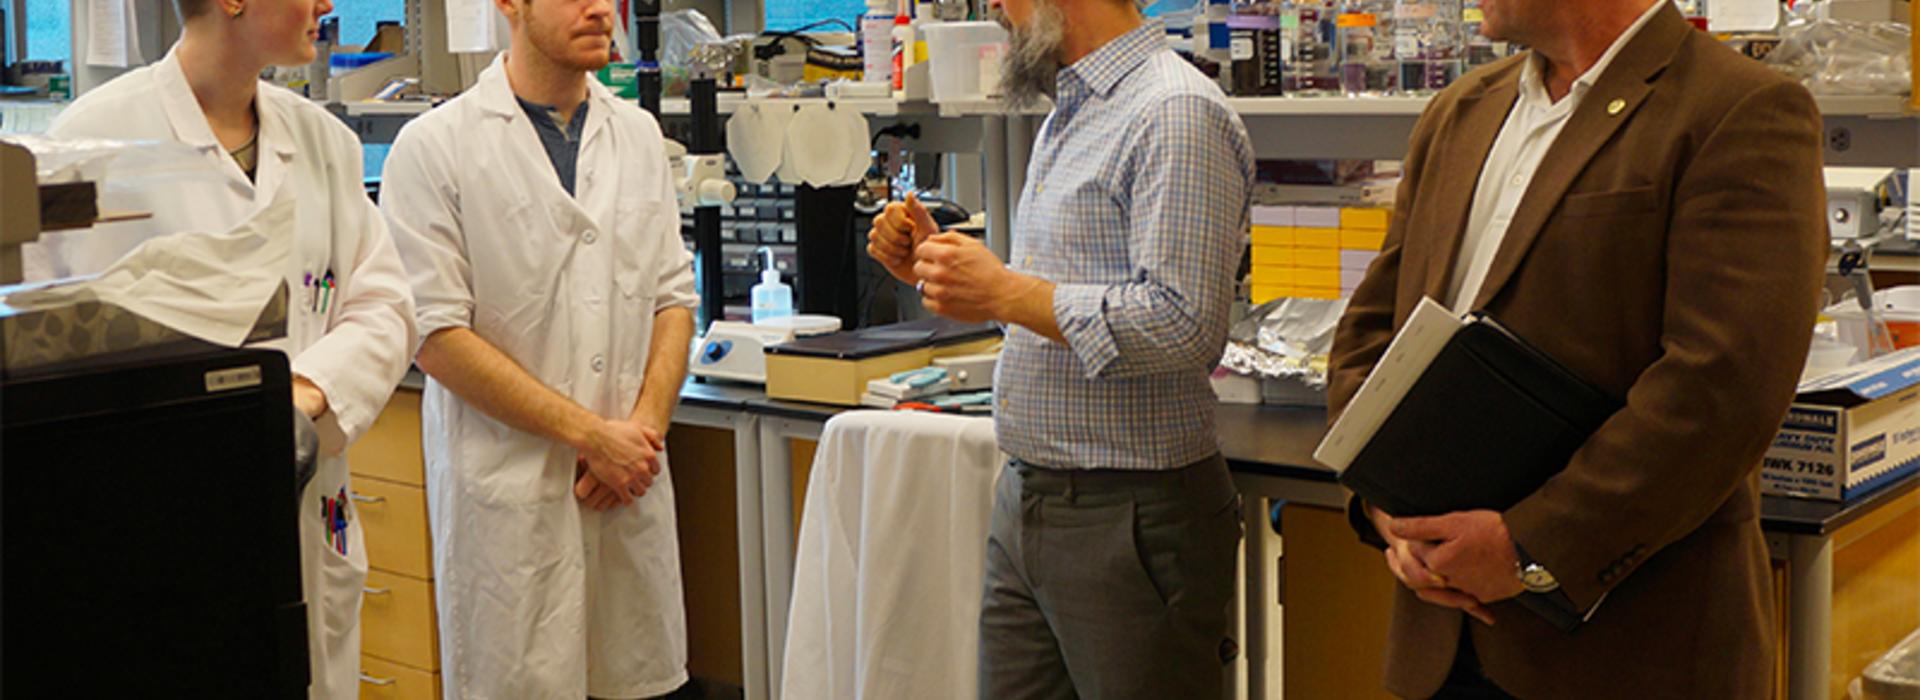 Representative Dave Baker touring a medical lab 